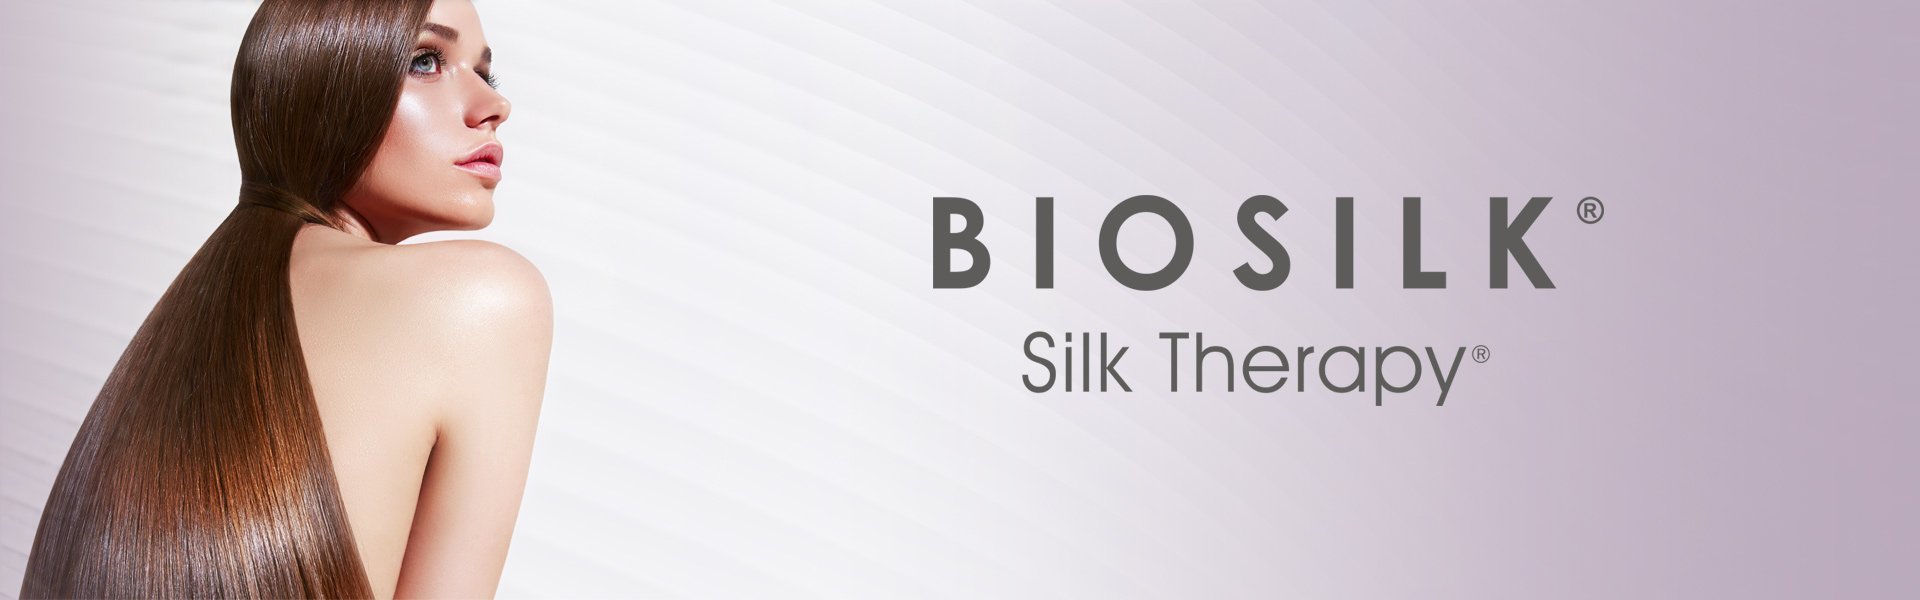 <p>Хотите улучшить свой образ и подчеркнуть вашу красоту? Тогда <b>Шампунь Biosilk Silk Therapy Volumizing Farouk (355 мл)</b> поможет вам достичь ваших целей! Насладитесь преимуществами <b>продуктов </b><b>Farouk</b> и других <b>аксессуаров для волос </b>от <b>100% оригинальных брендов</b>.</p>

<p></p>

<ul>
	<li>Объем: 355 мл</li>
	<li>Характеристики: Поддерживает объем</li>
	<li>Тип: Шампунь</li>
</ul>

<p></p>
 Biosilk